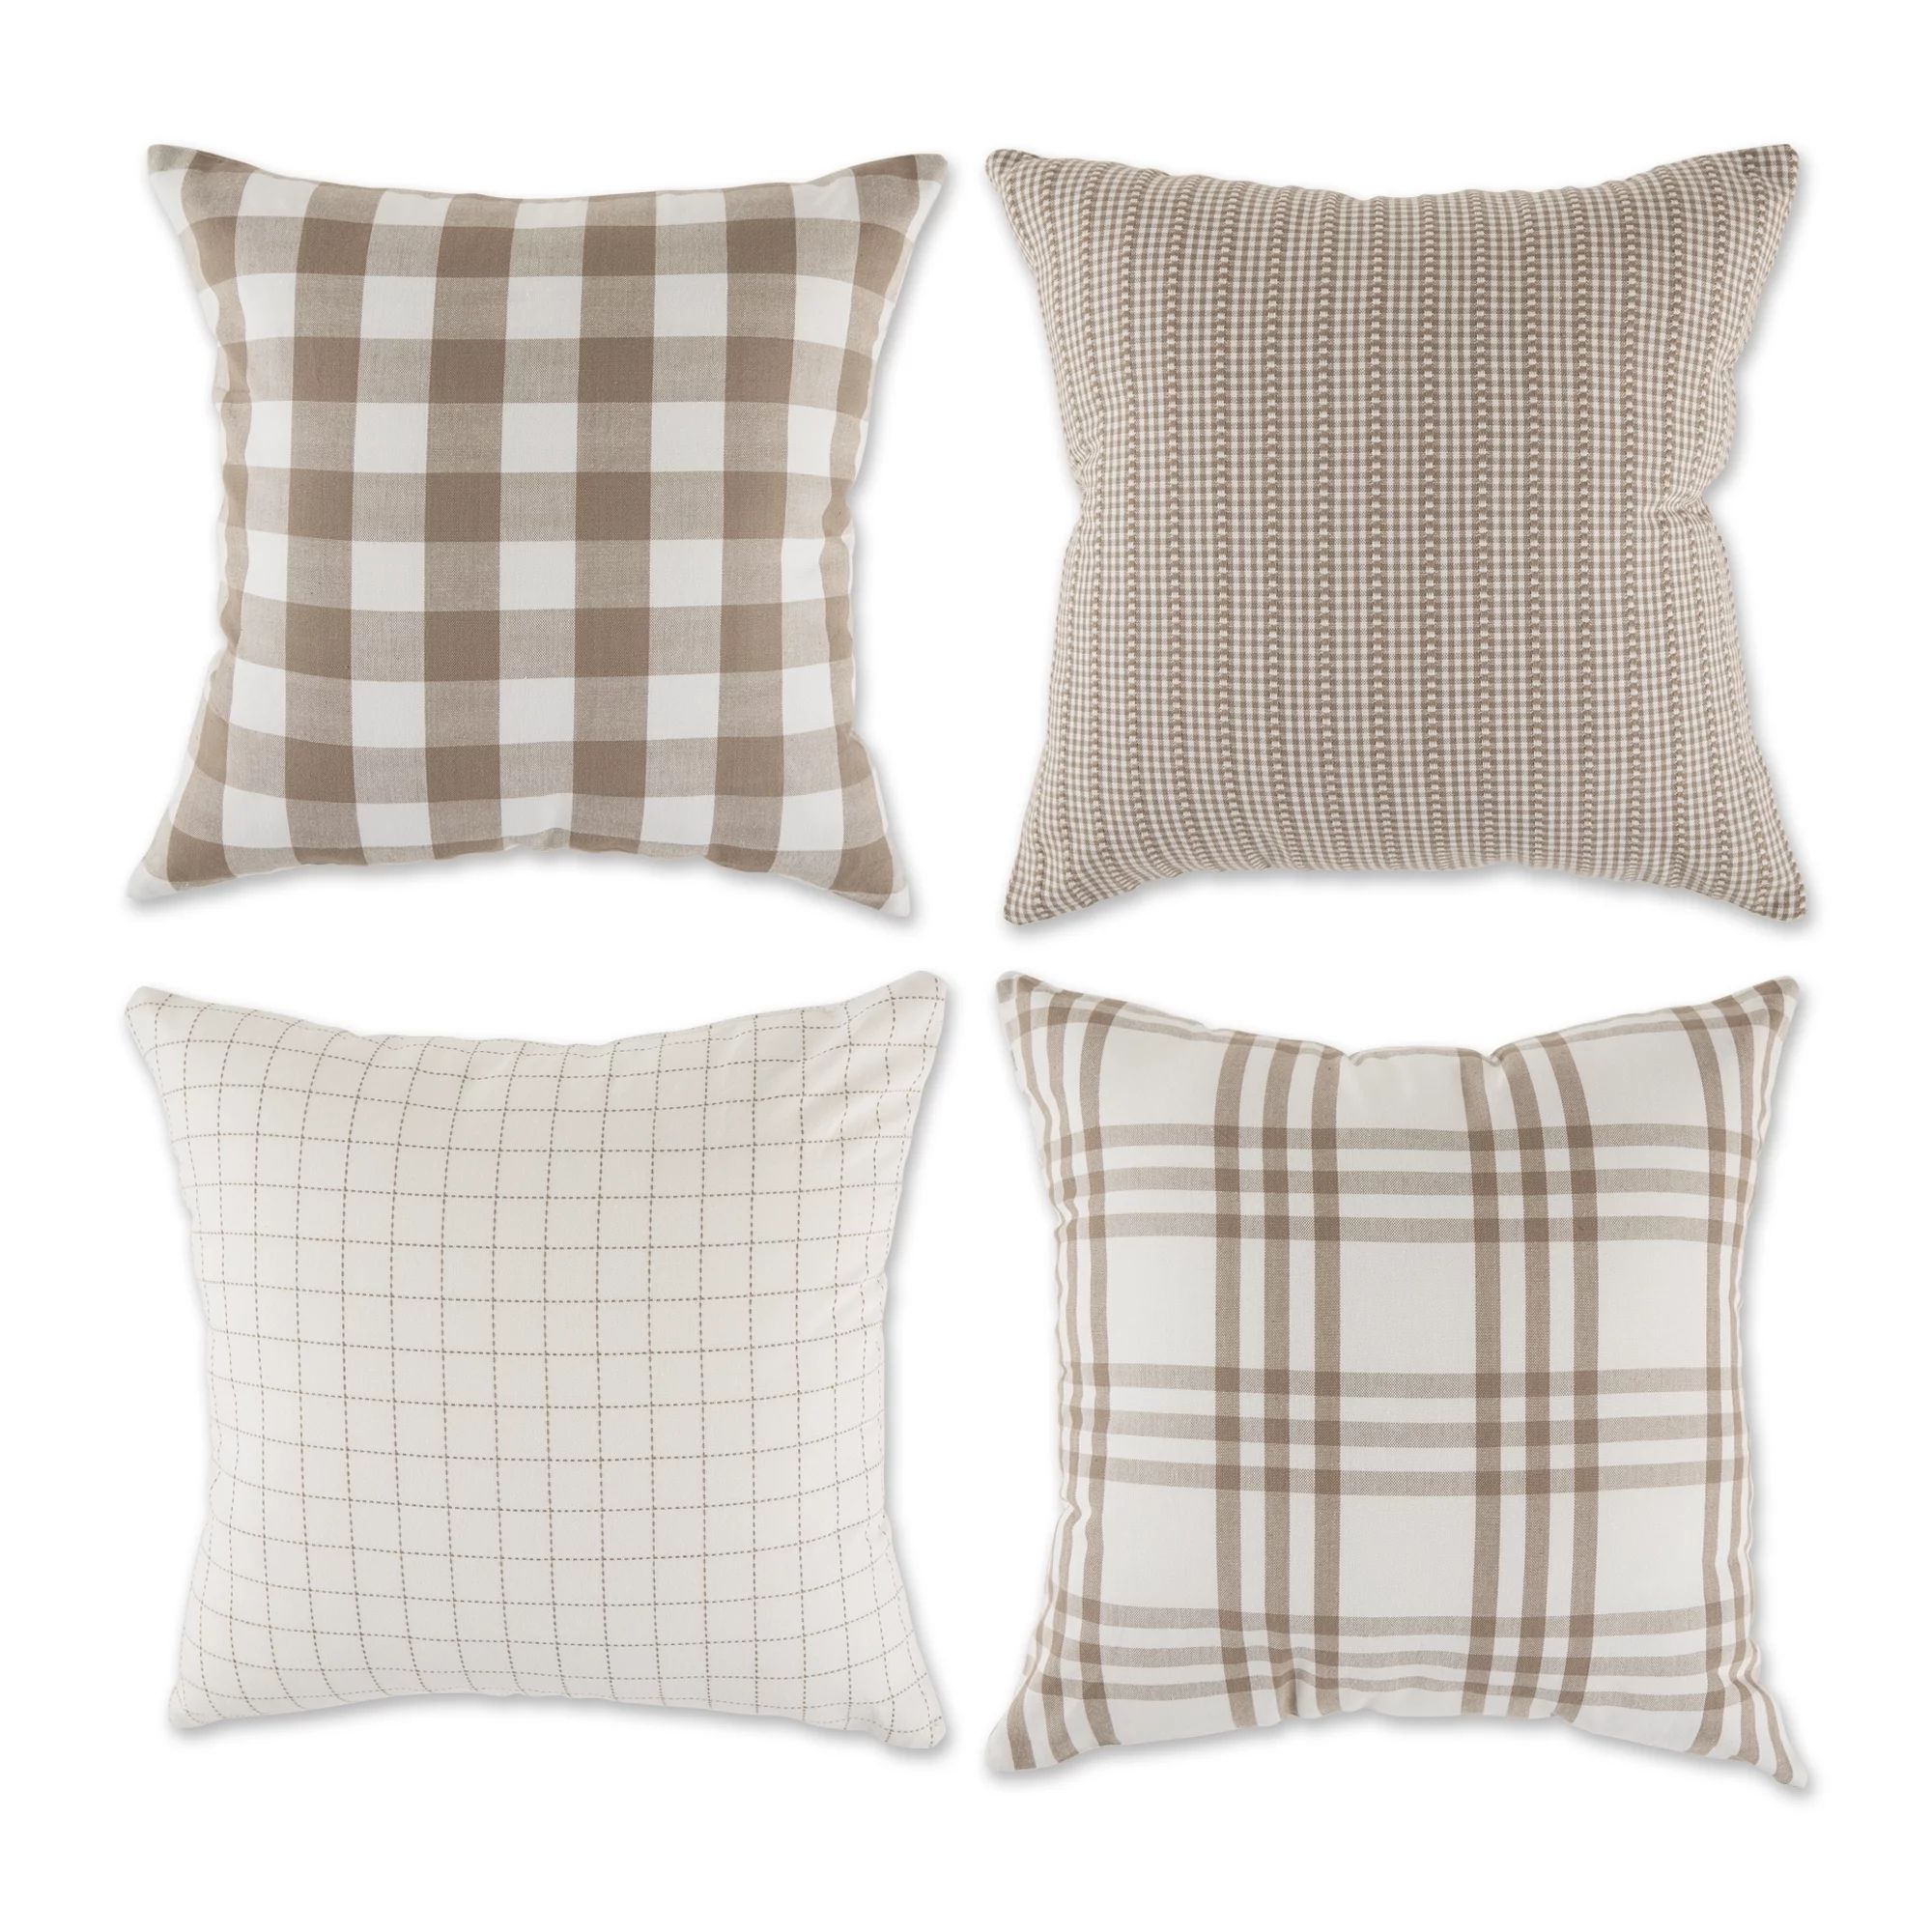 DII Asst Stone Farmhouse Pillow Covers 18 x 18 Inch, 4 Pieces | Walmart (US)